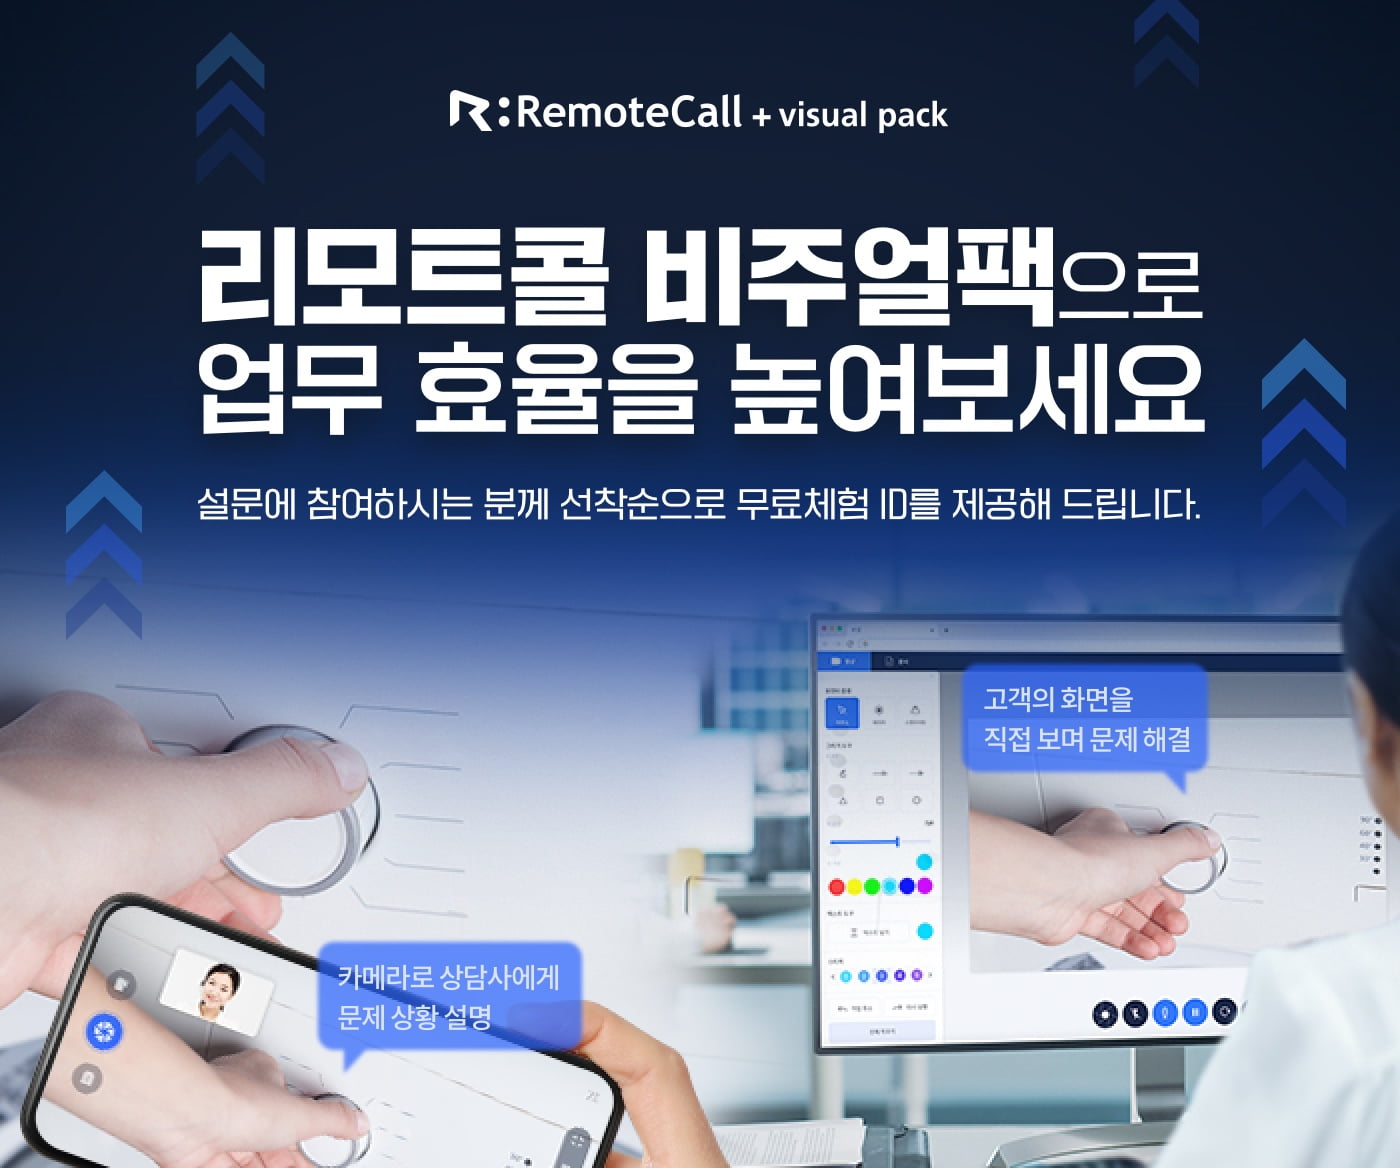 RemoteCall + visual pack. 리모트콜 비주얼팩으로 업무 효율을 높여보세요. 설문에 참여하시는 분께 선착순으로 무료체험 ID를 제공해 드립니다.